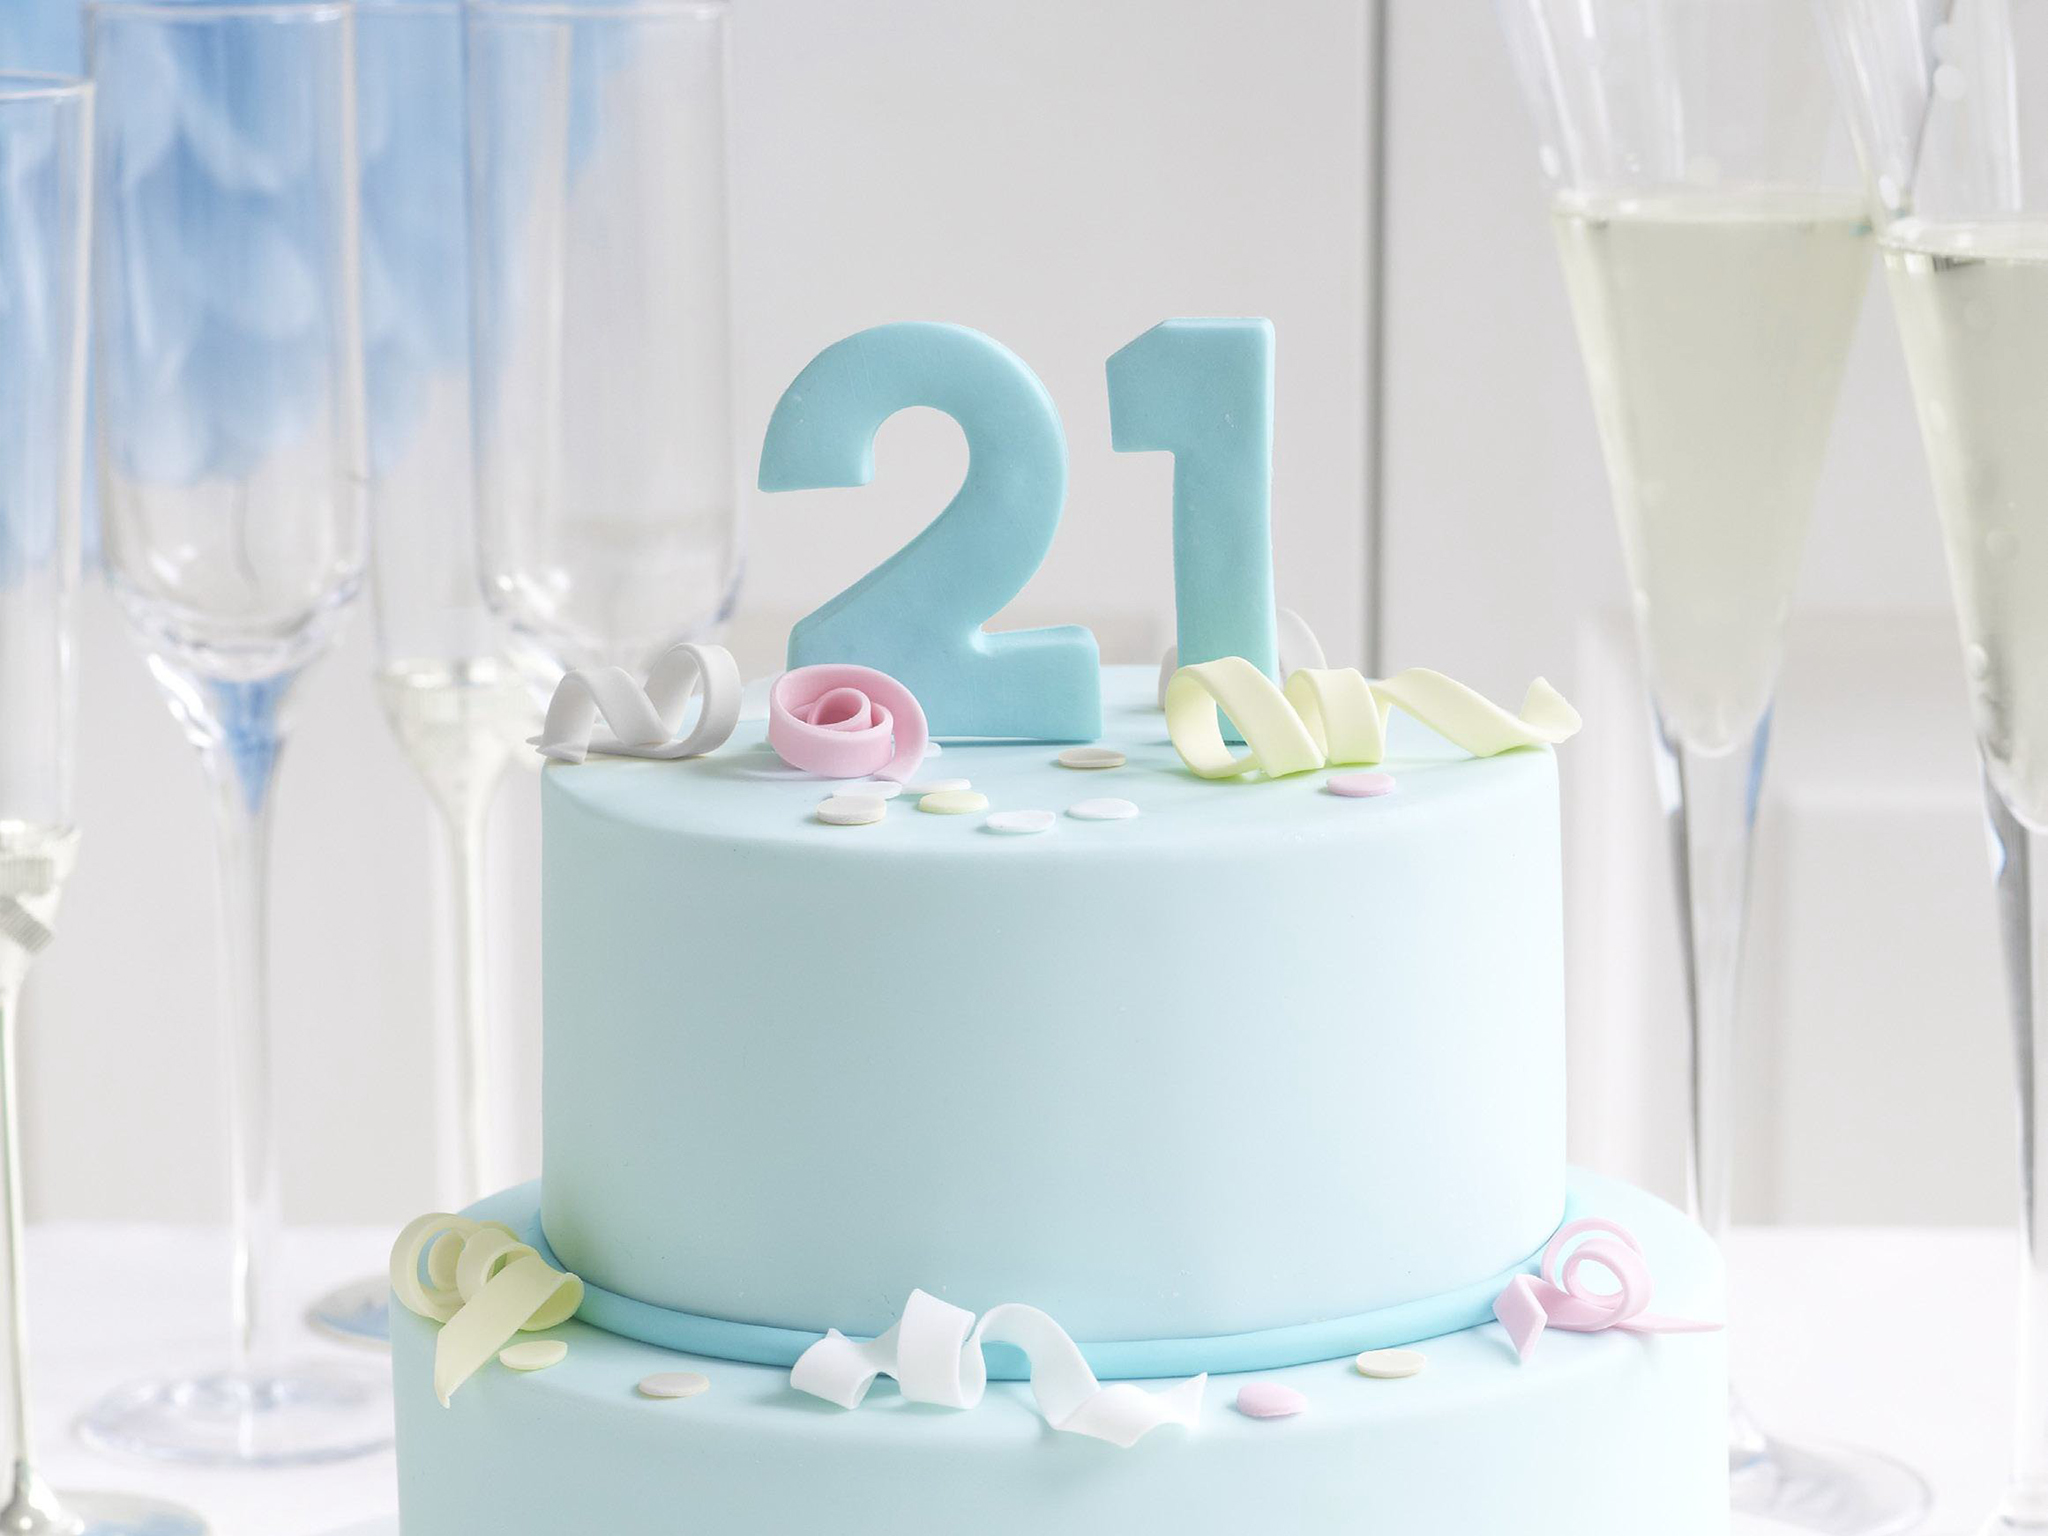 21st Celebration Cake